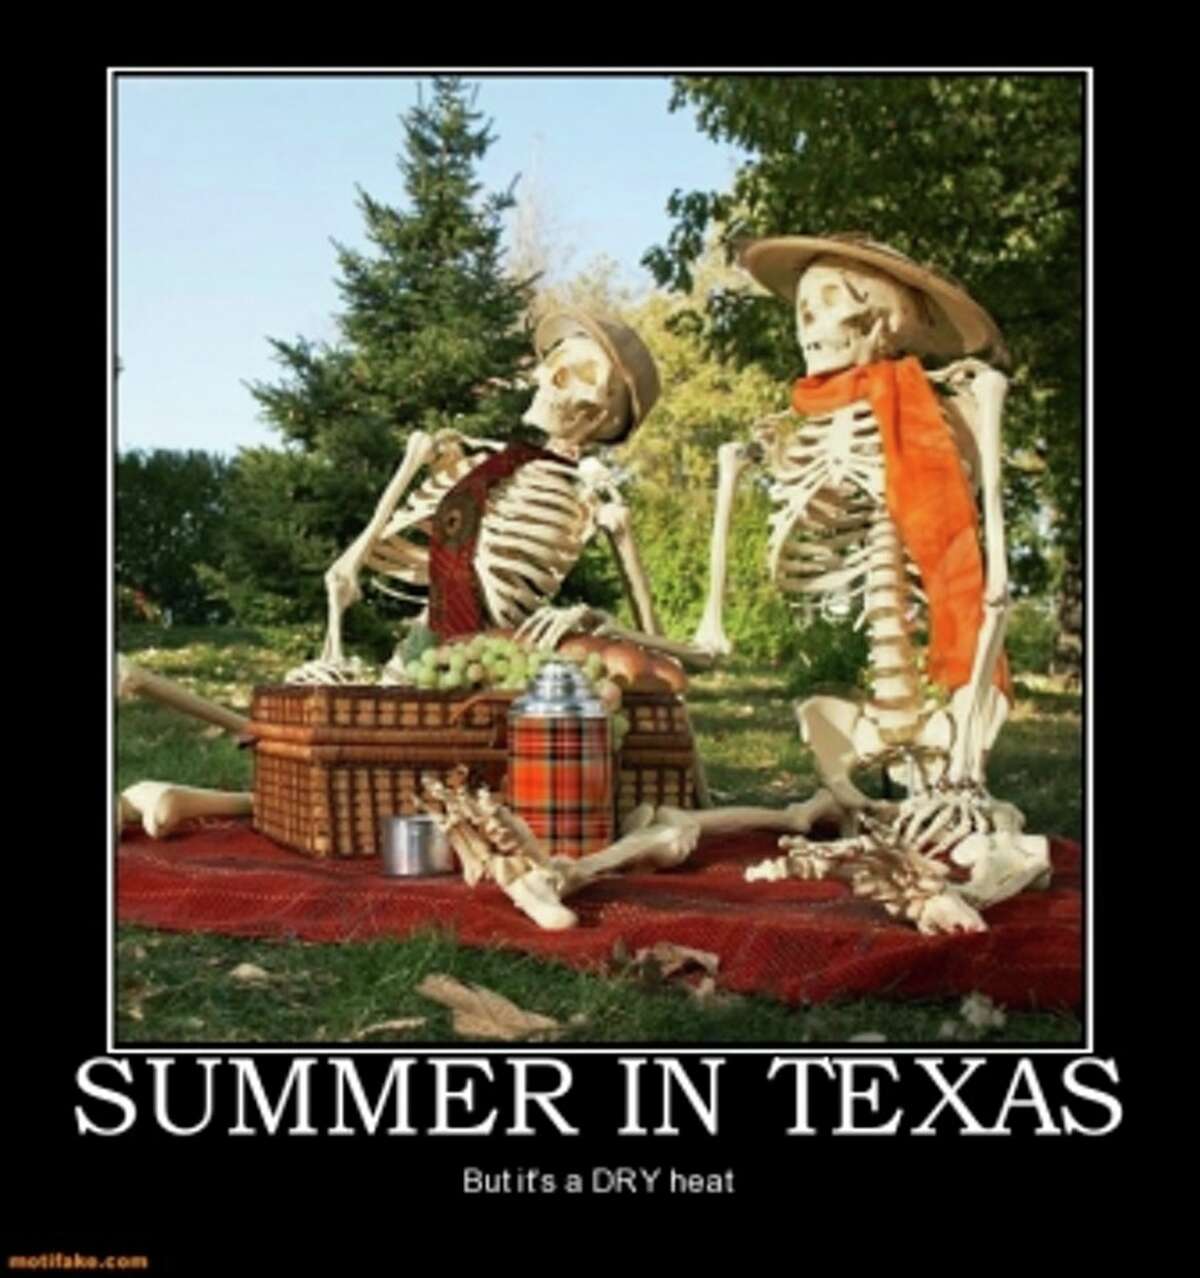 Memes show San Antonio is already sick of the heat; facing 'sticky